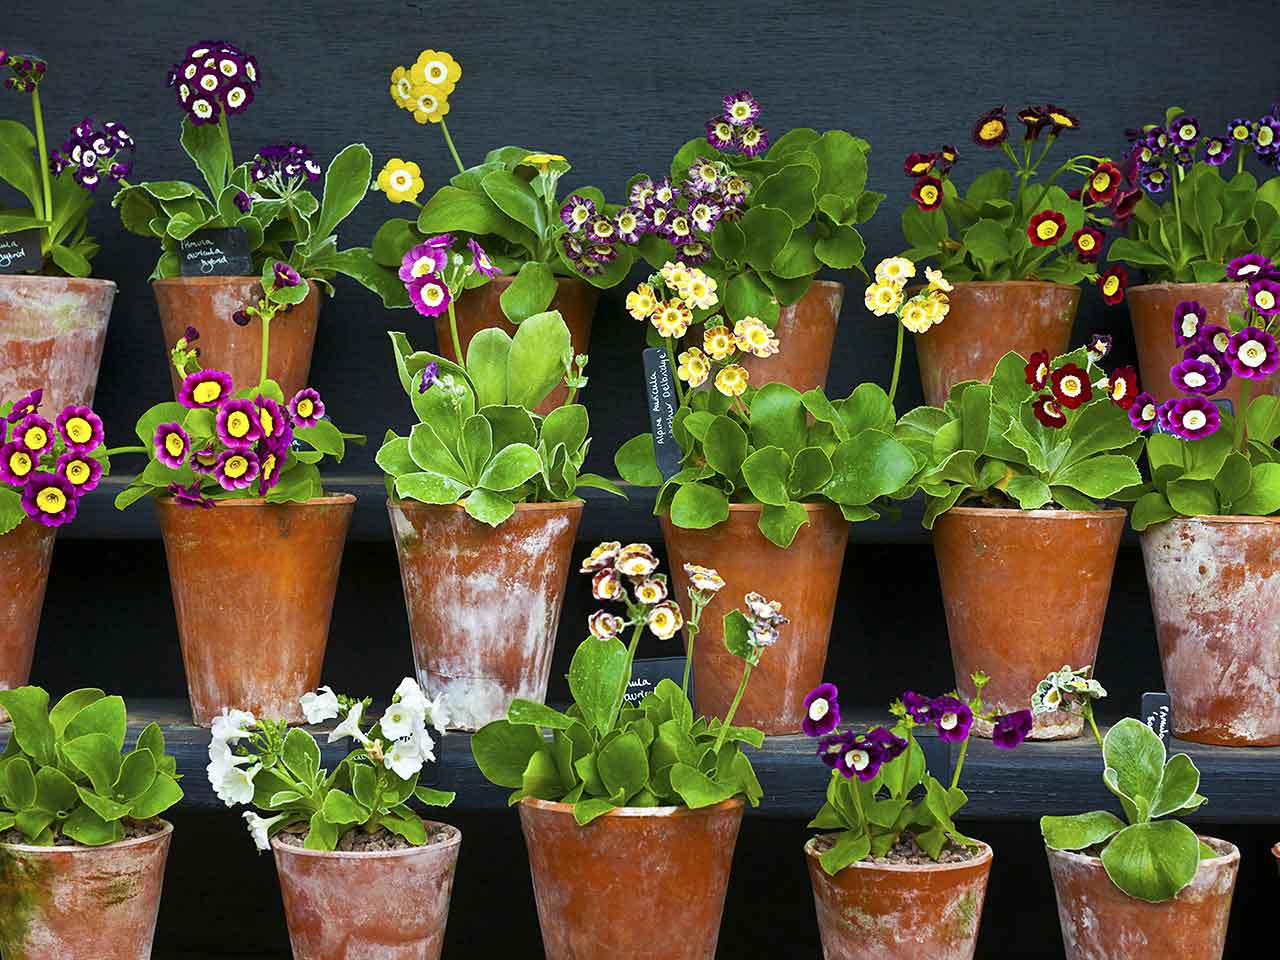 Auriculas in flower pots